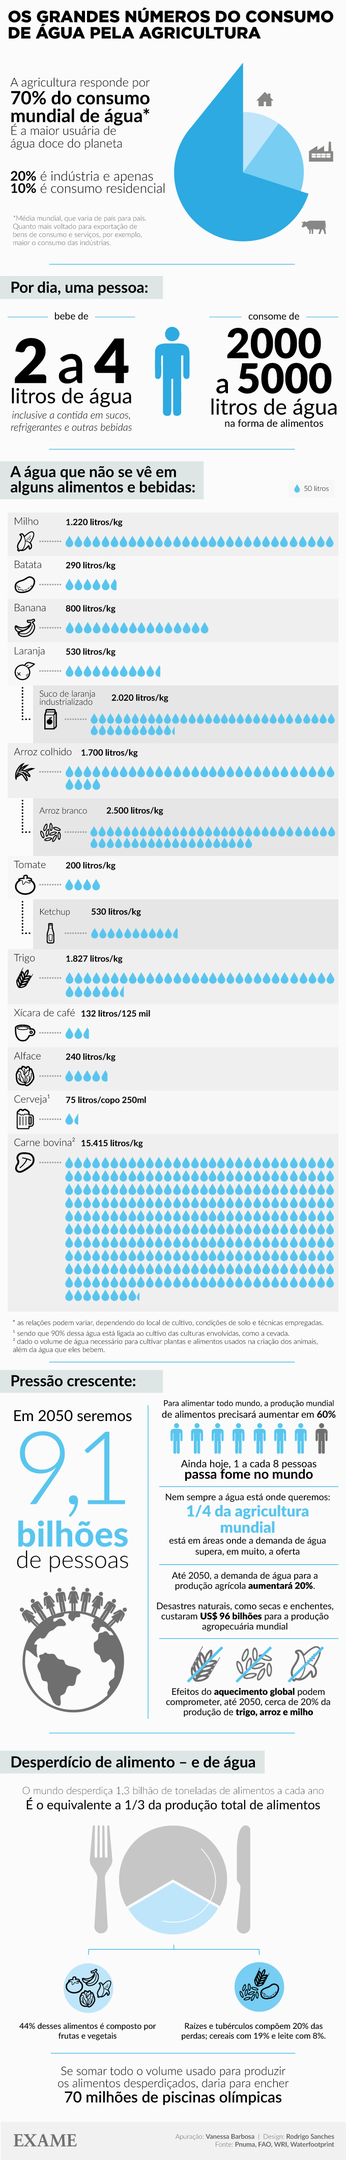 Infográfico sobre o consumo de água na agricultura.